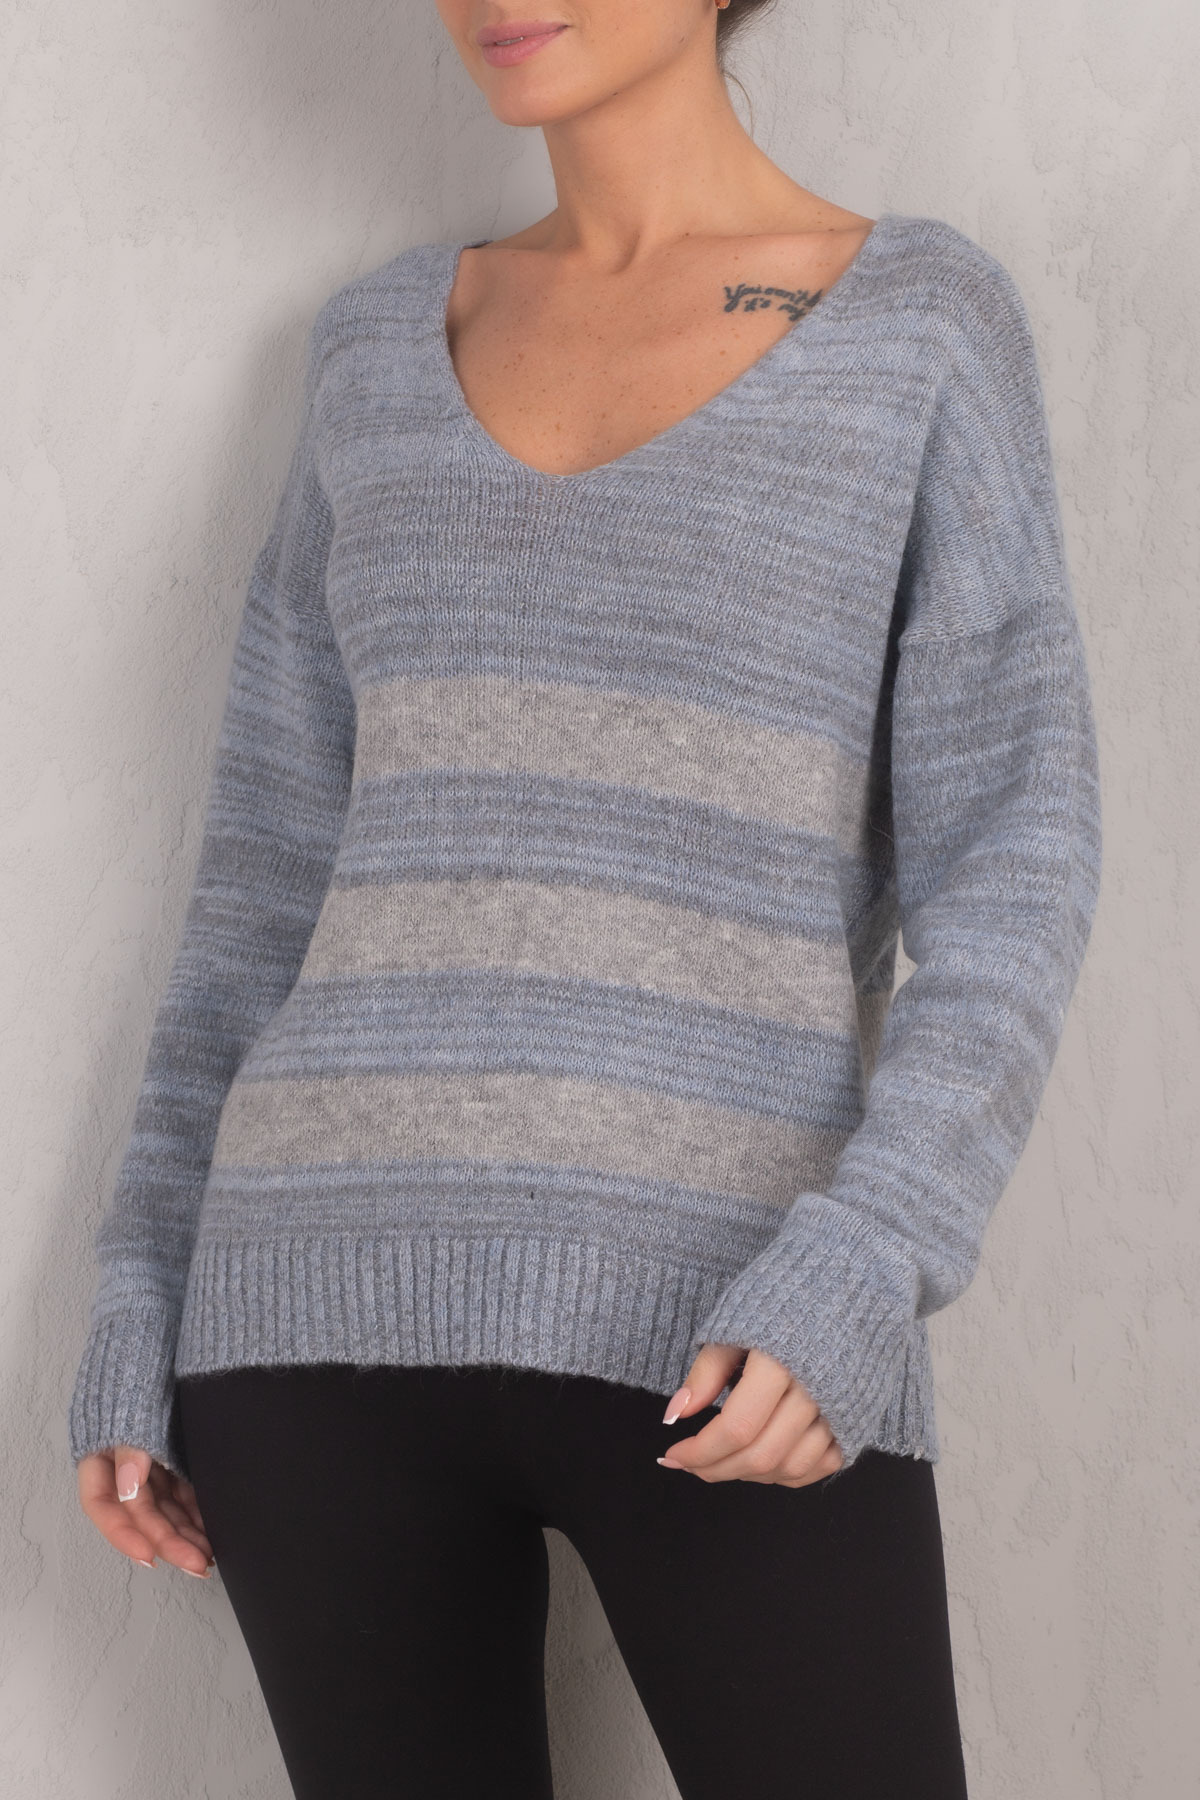 armonika Women's Light Blue Lily V-Neck Striped Knitwear Sweater